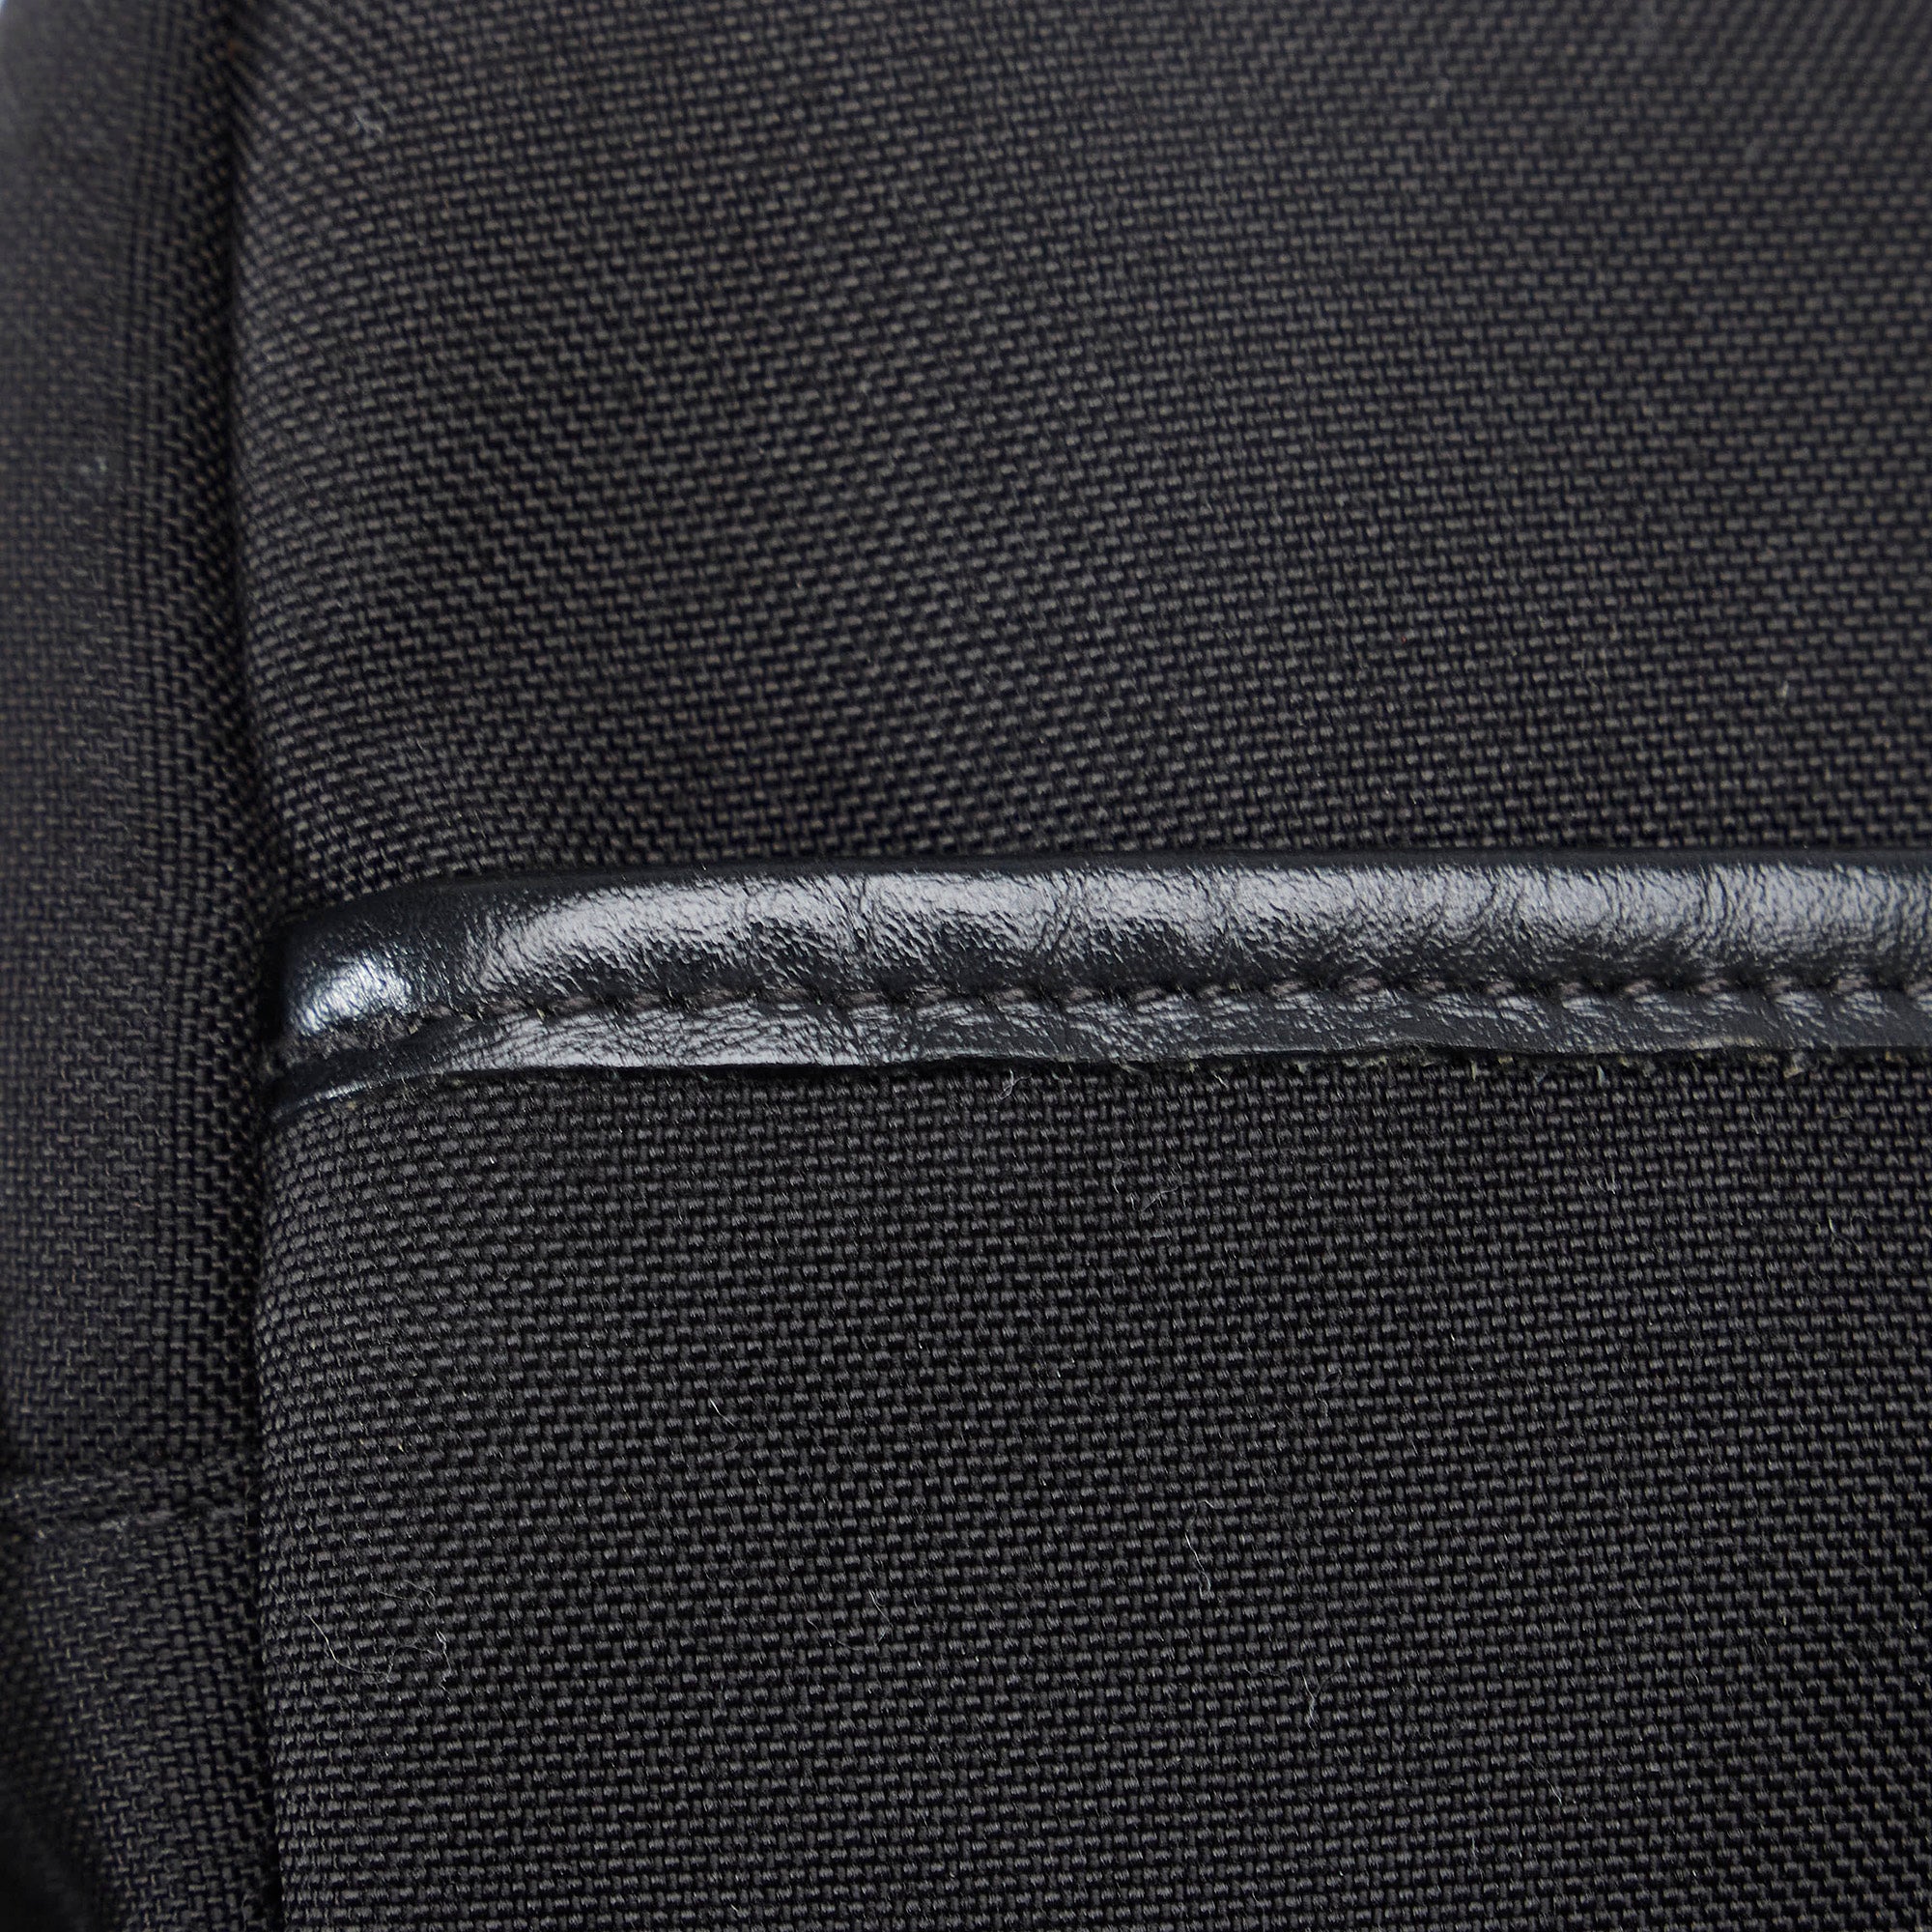 Black Saint Laurent Rivington Crossbody Bag – Designer Revival